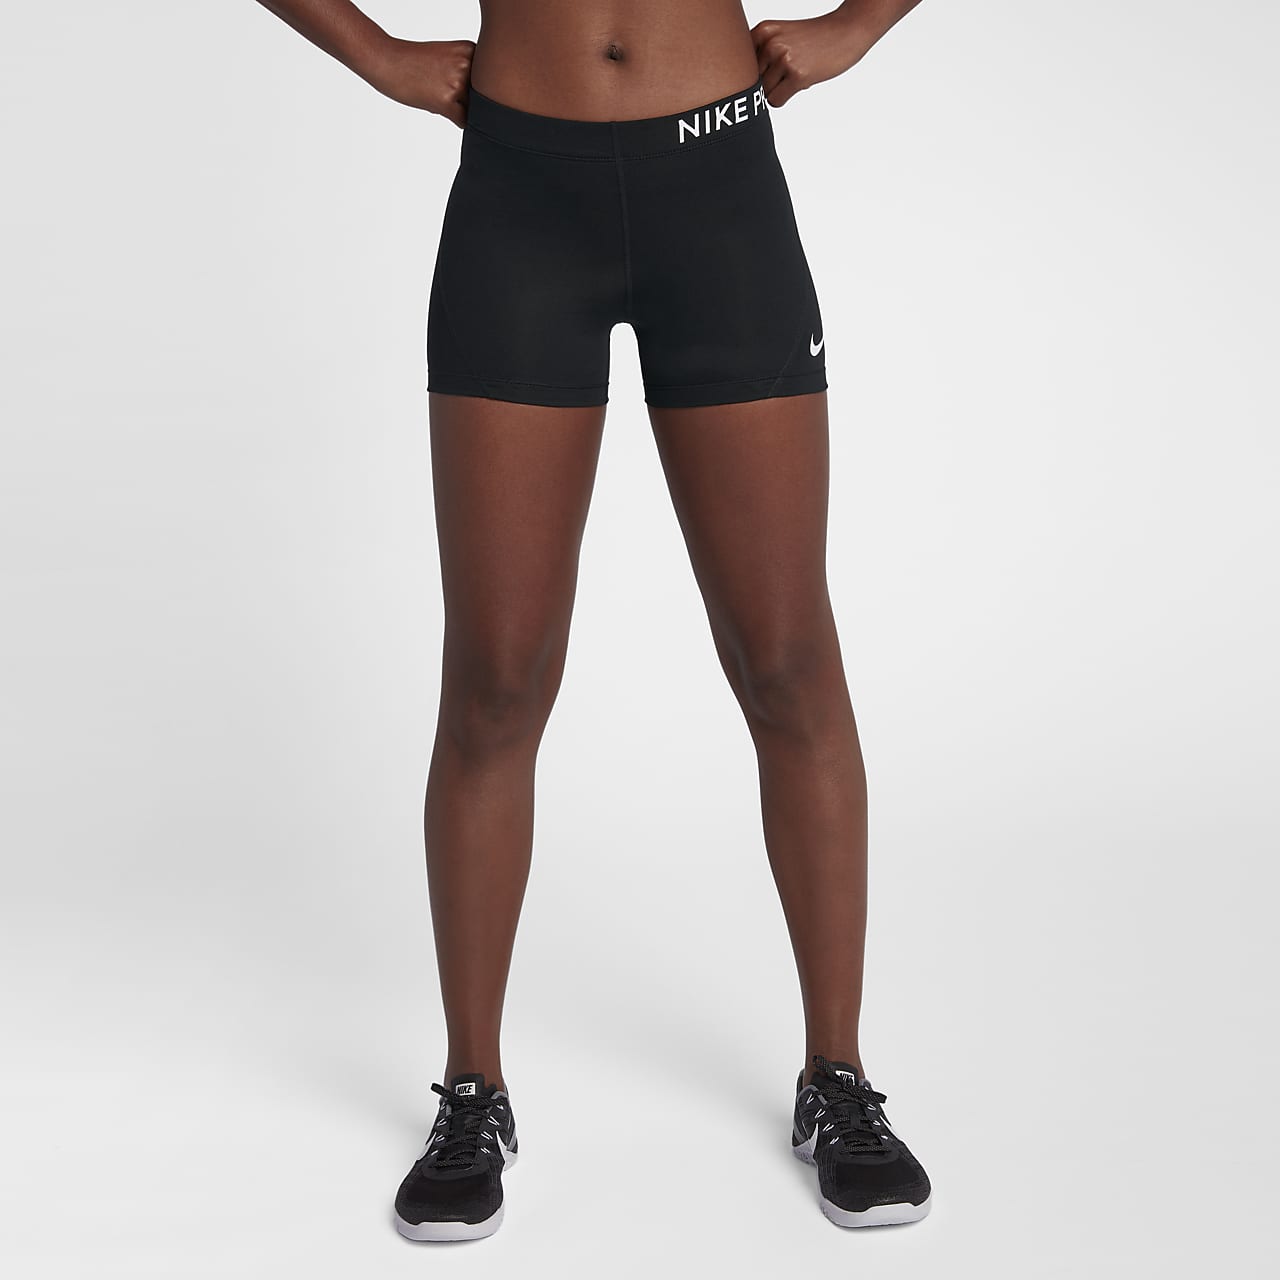 7.5cm approx.) Training Shorts. Nike 